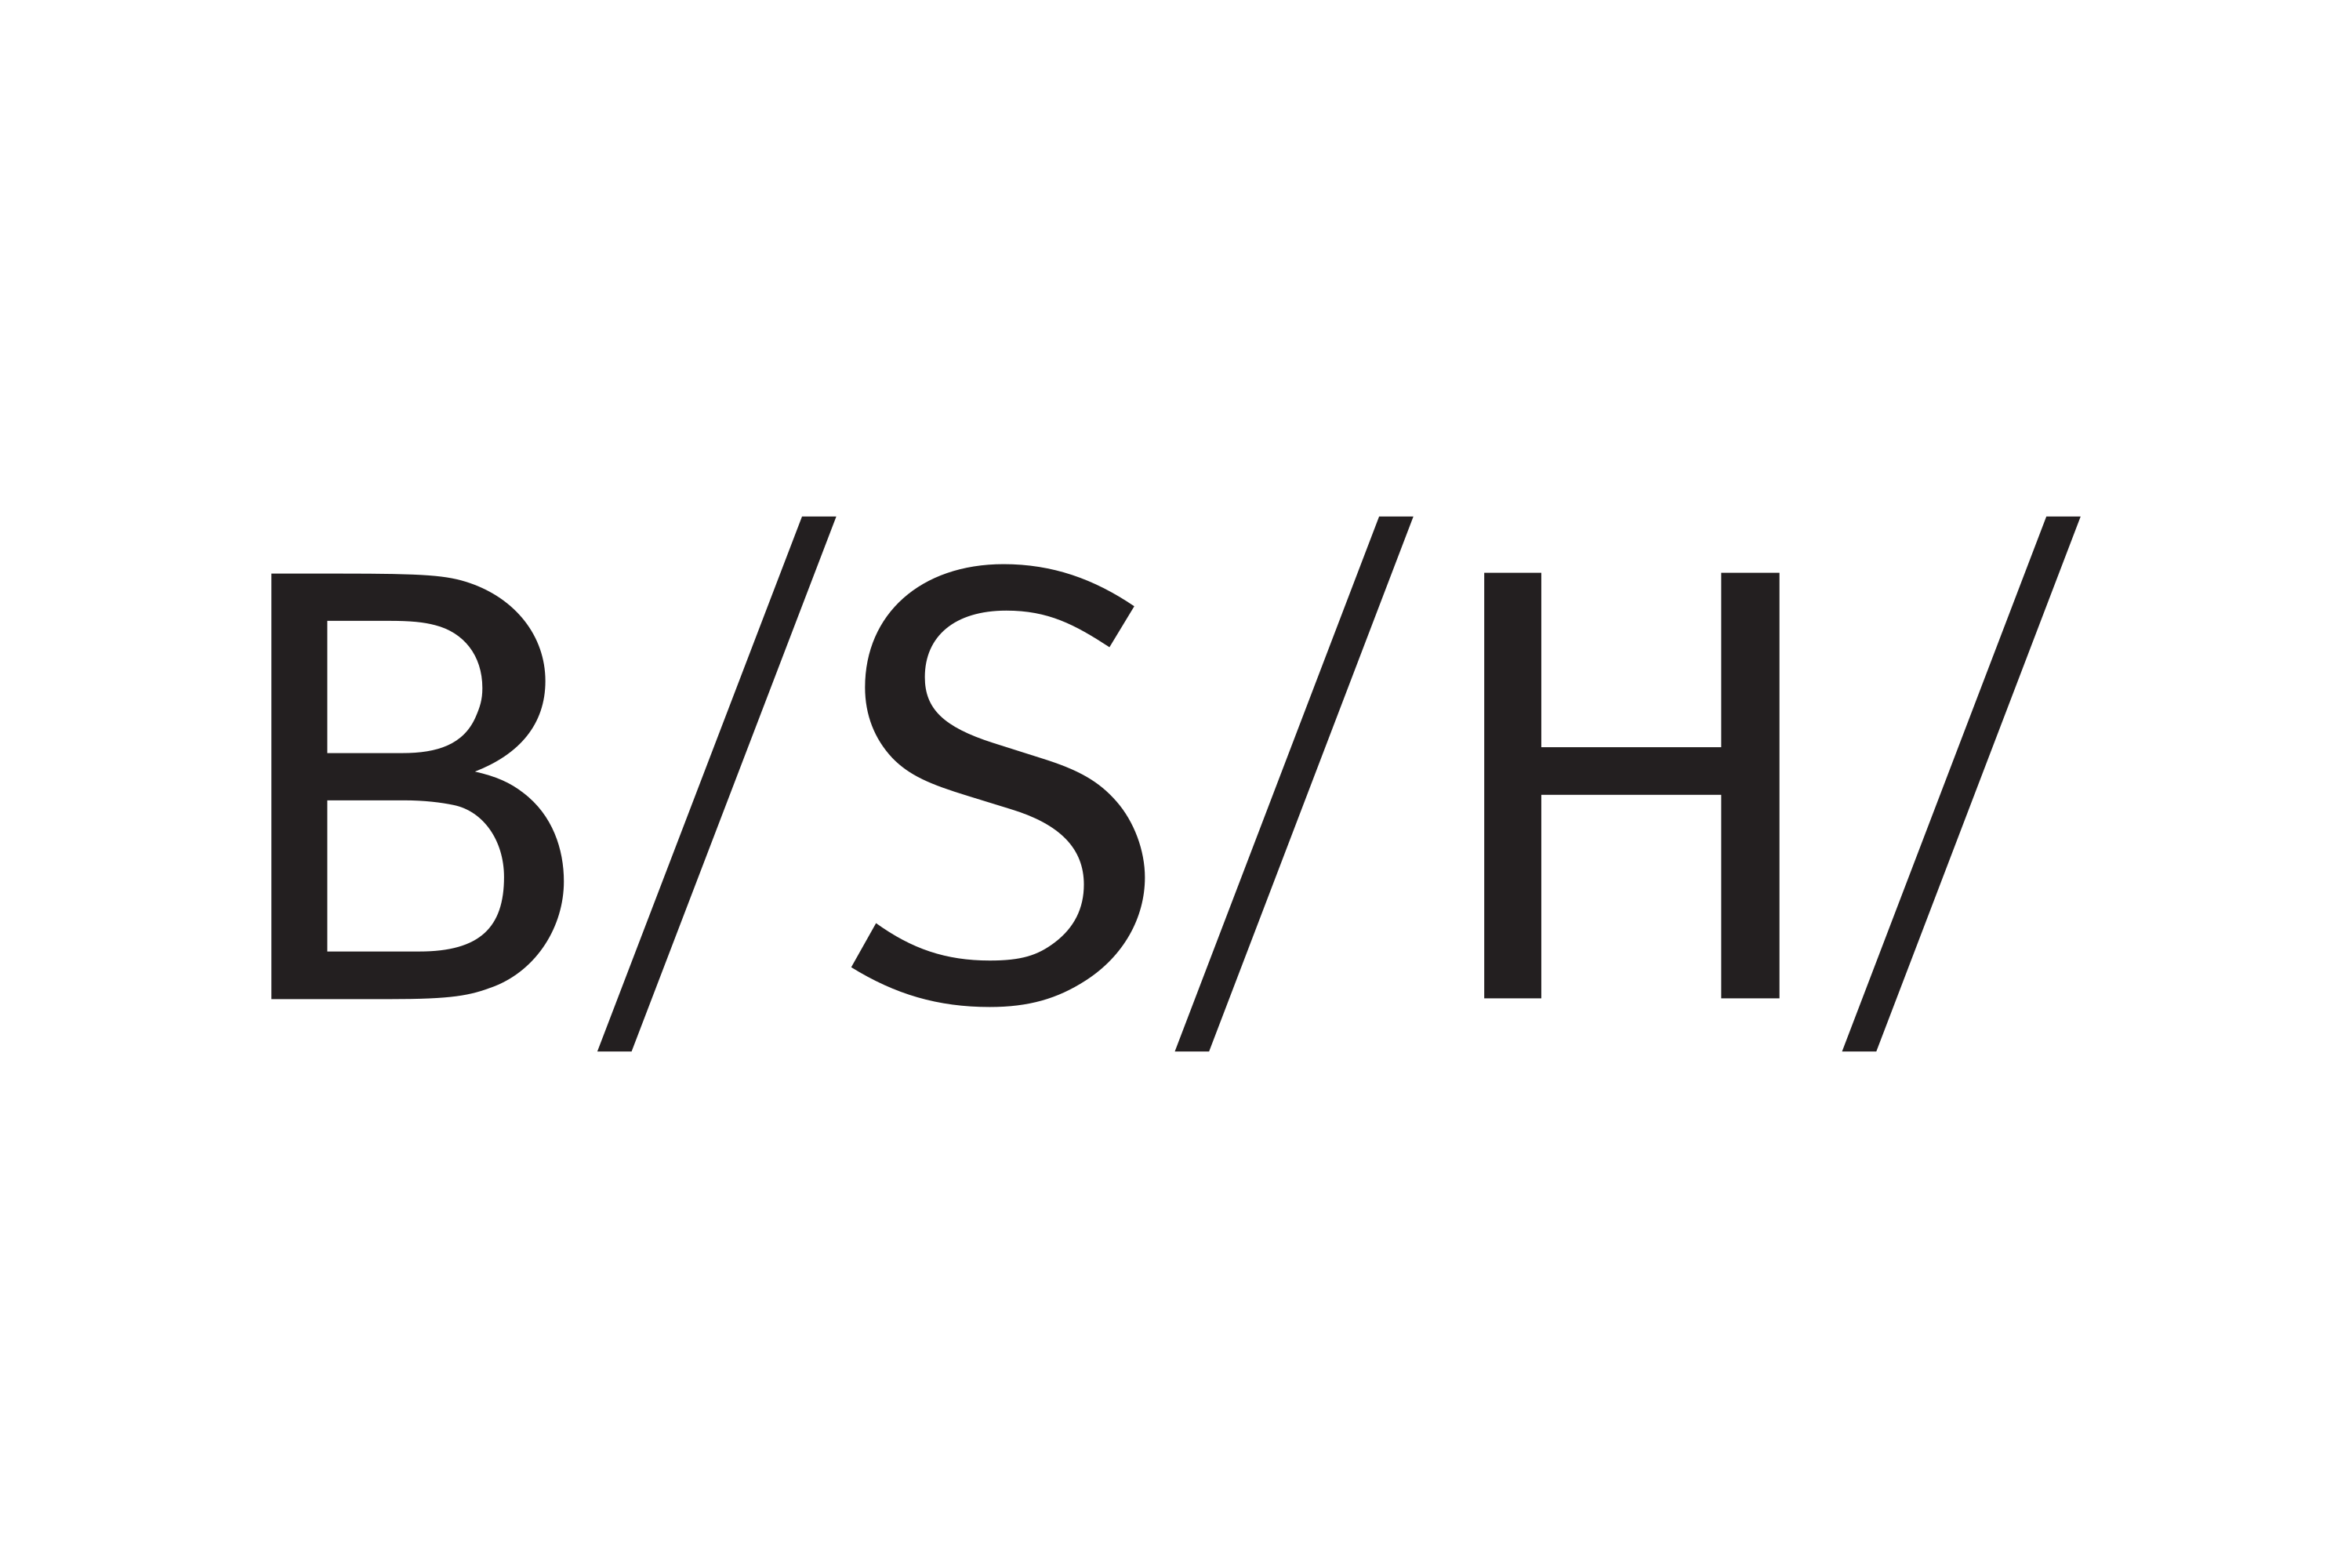 Download BSH Hausgeräte GmbH (BSH Home Appliances) Logo in SVG Vector